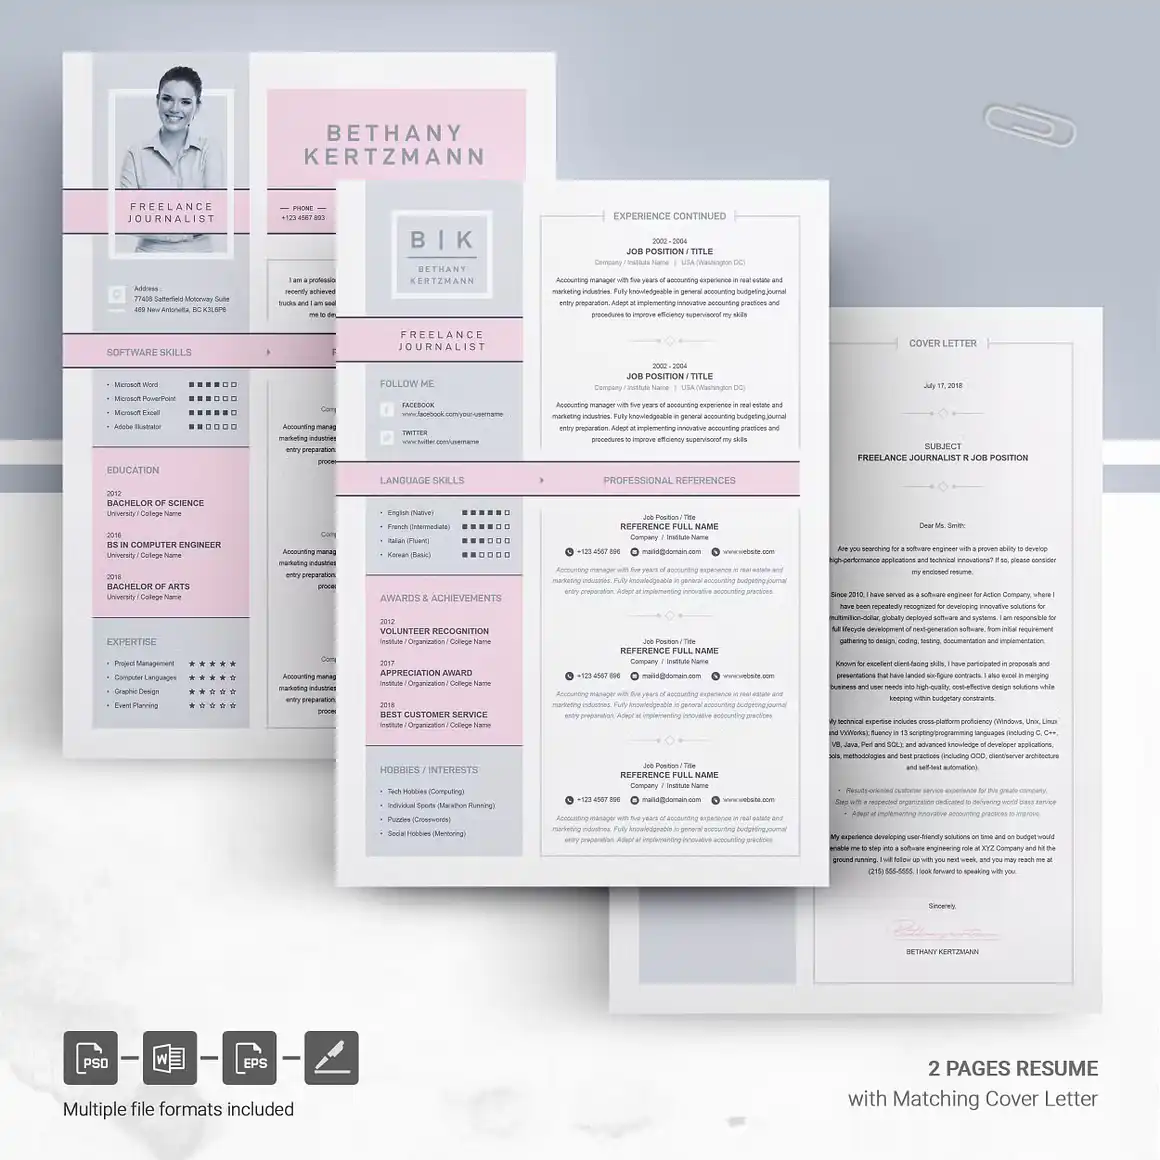 Cool & Creative CV Resume Design 2